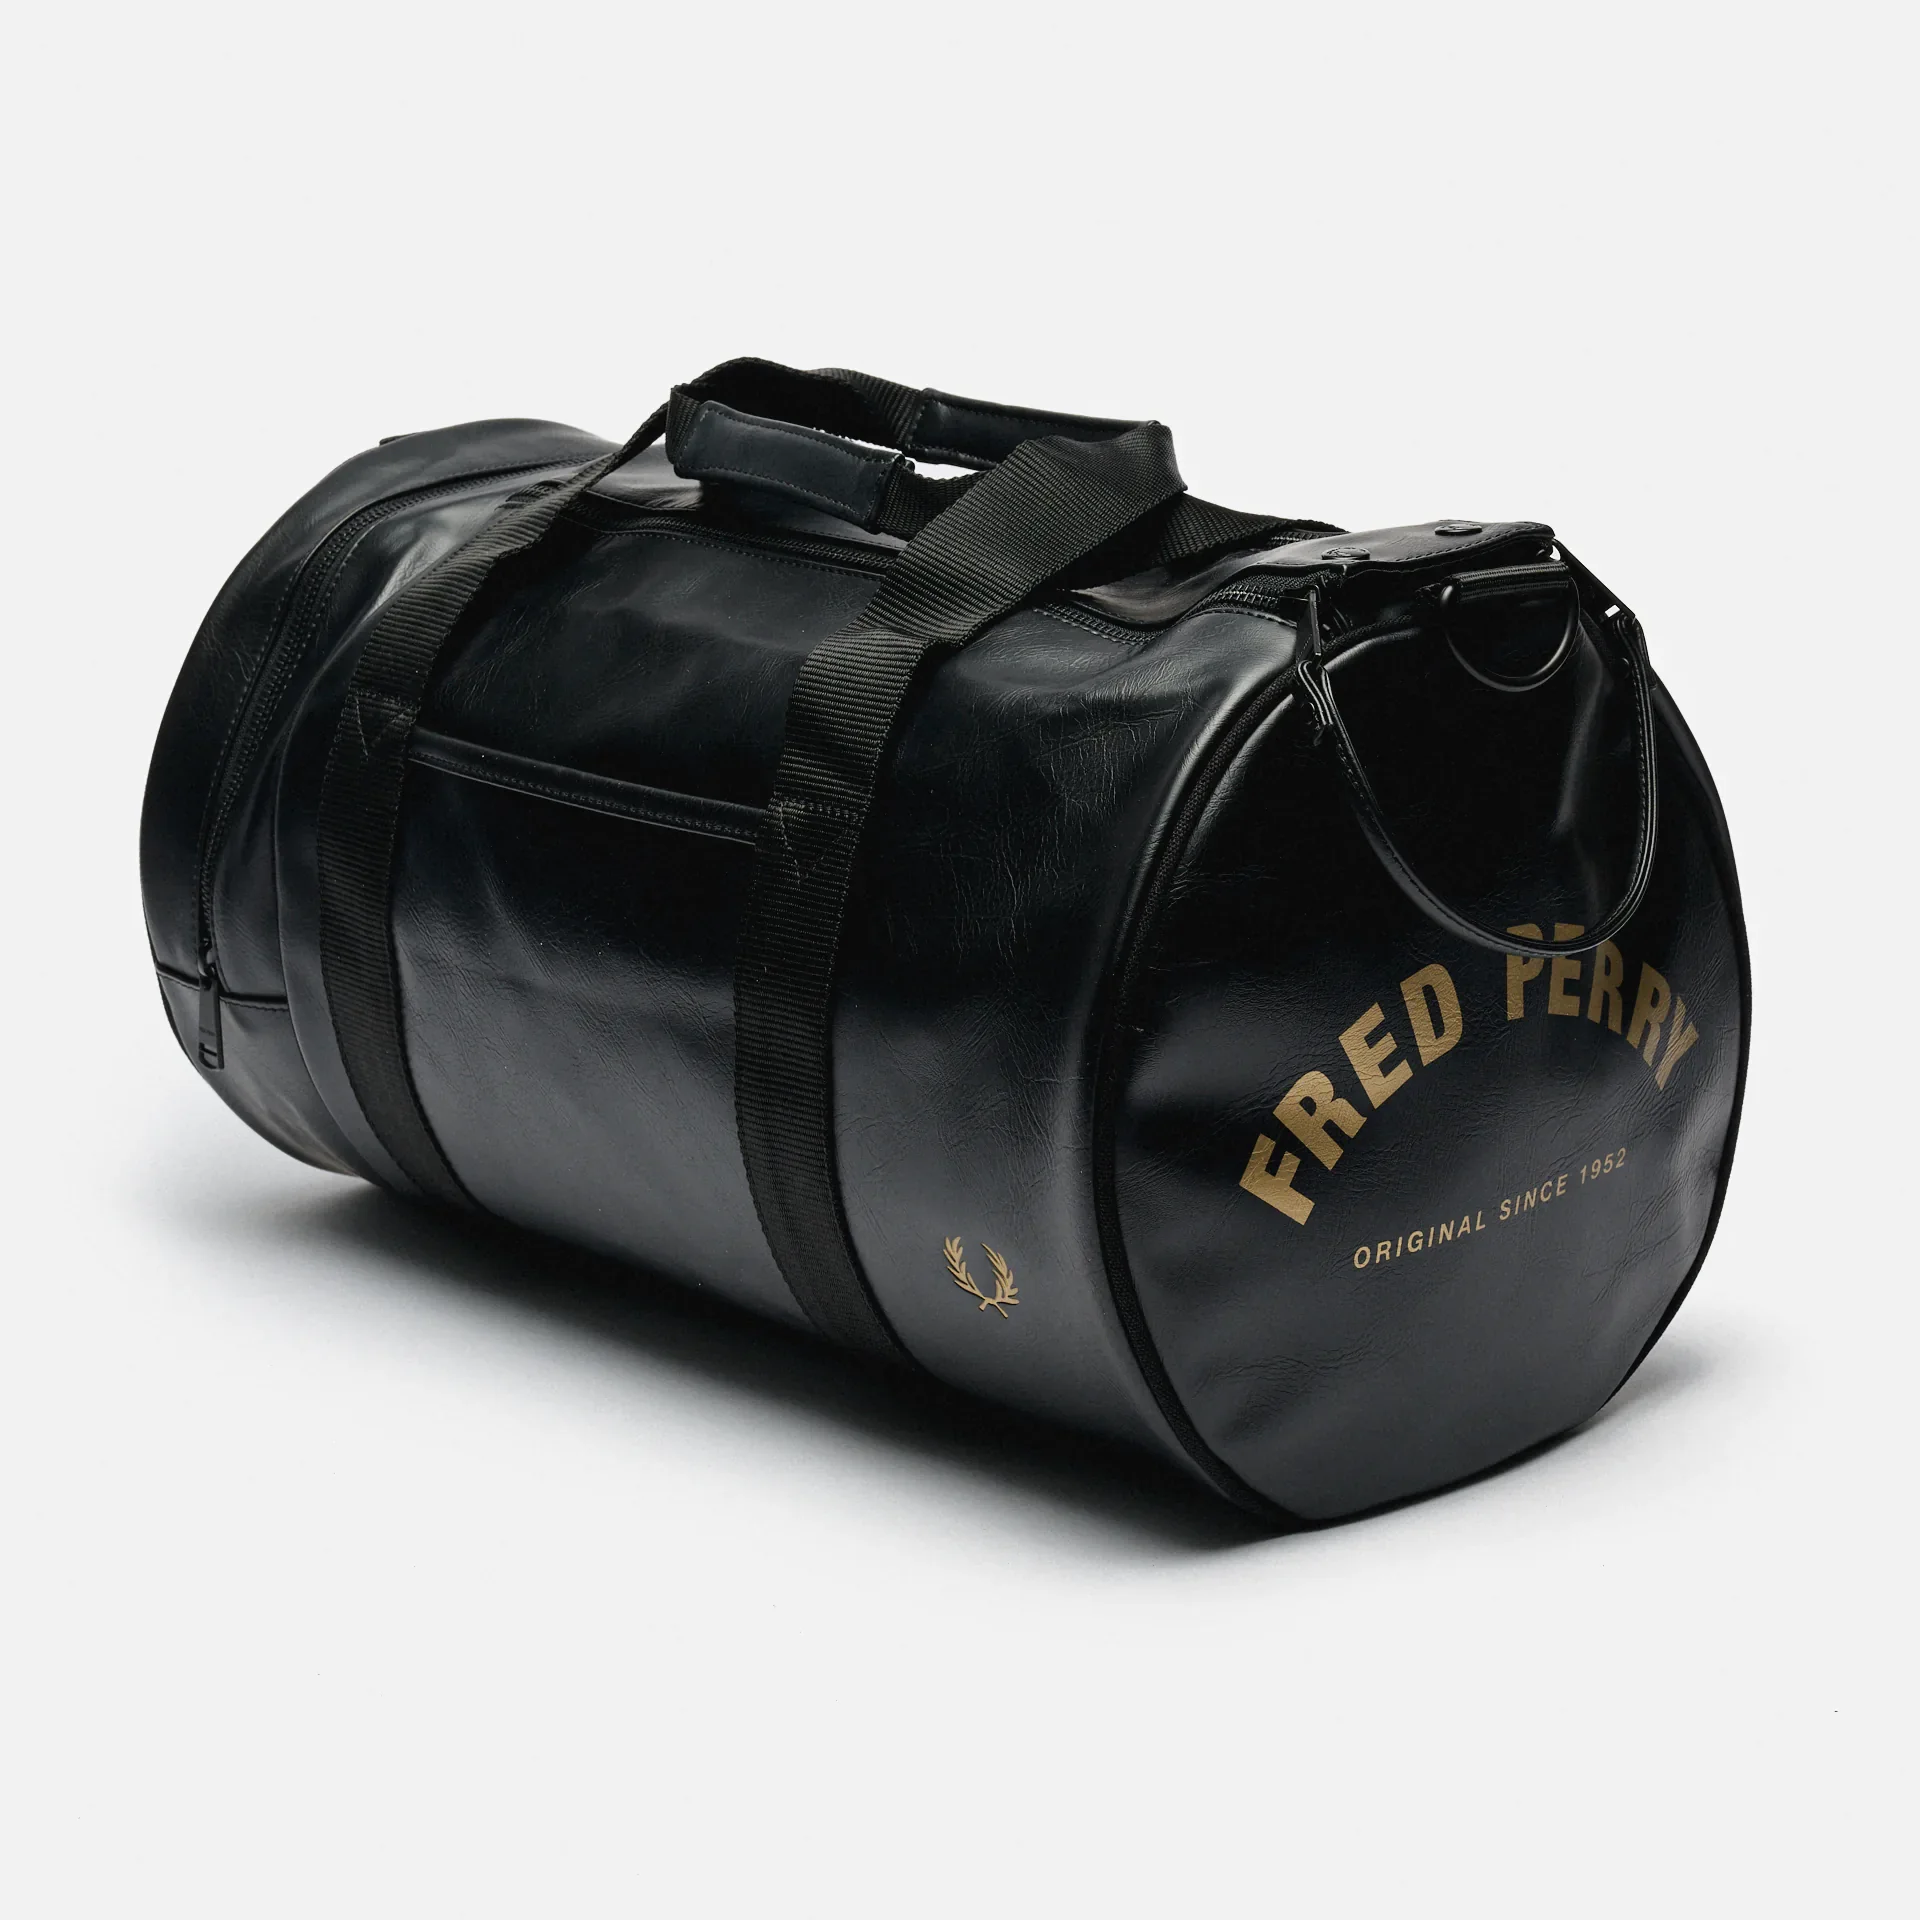 Fred Perry Tonal PU Barrel Bag Black